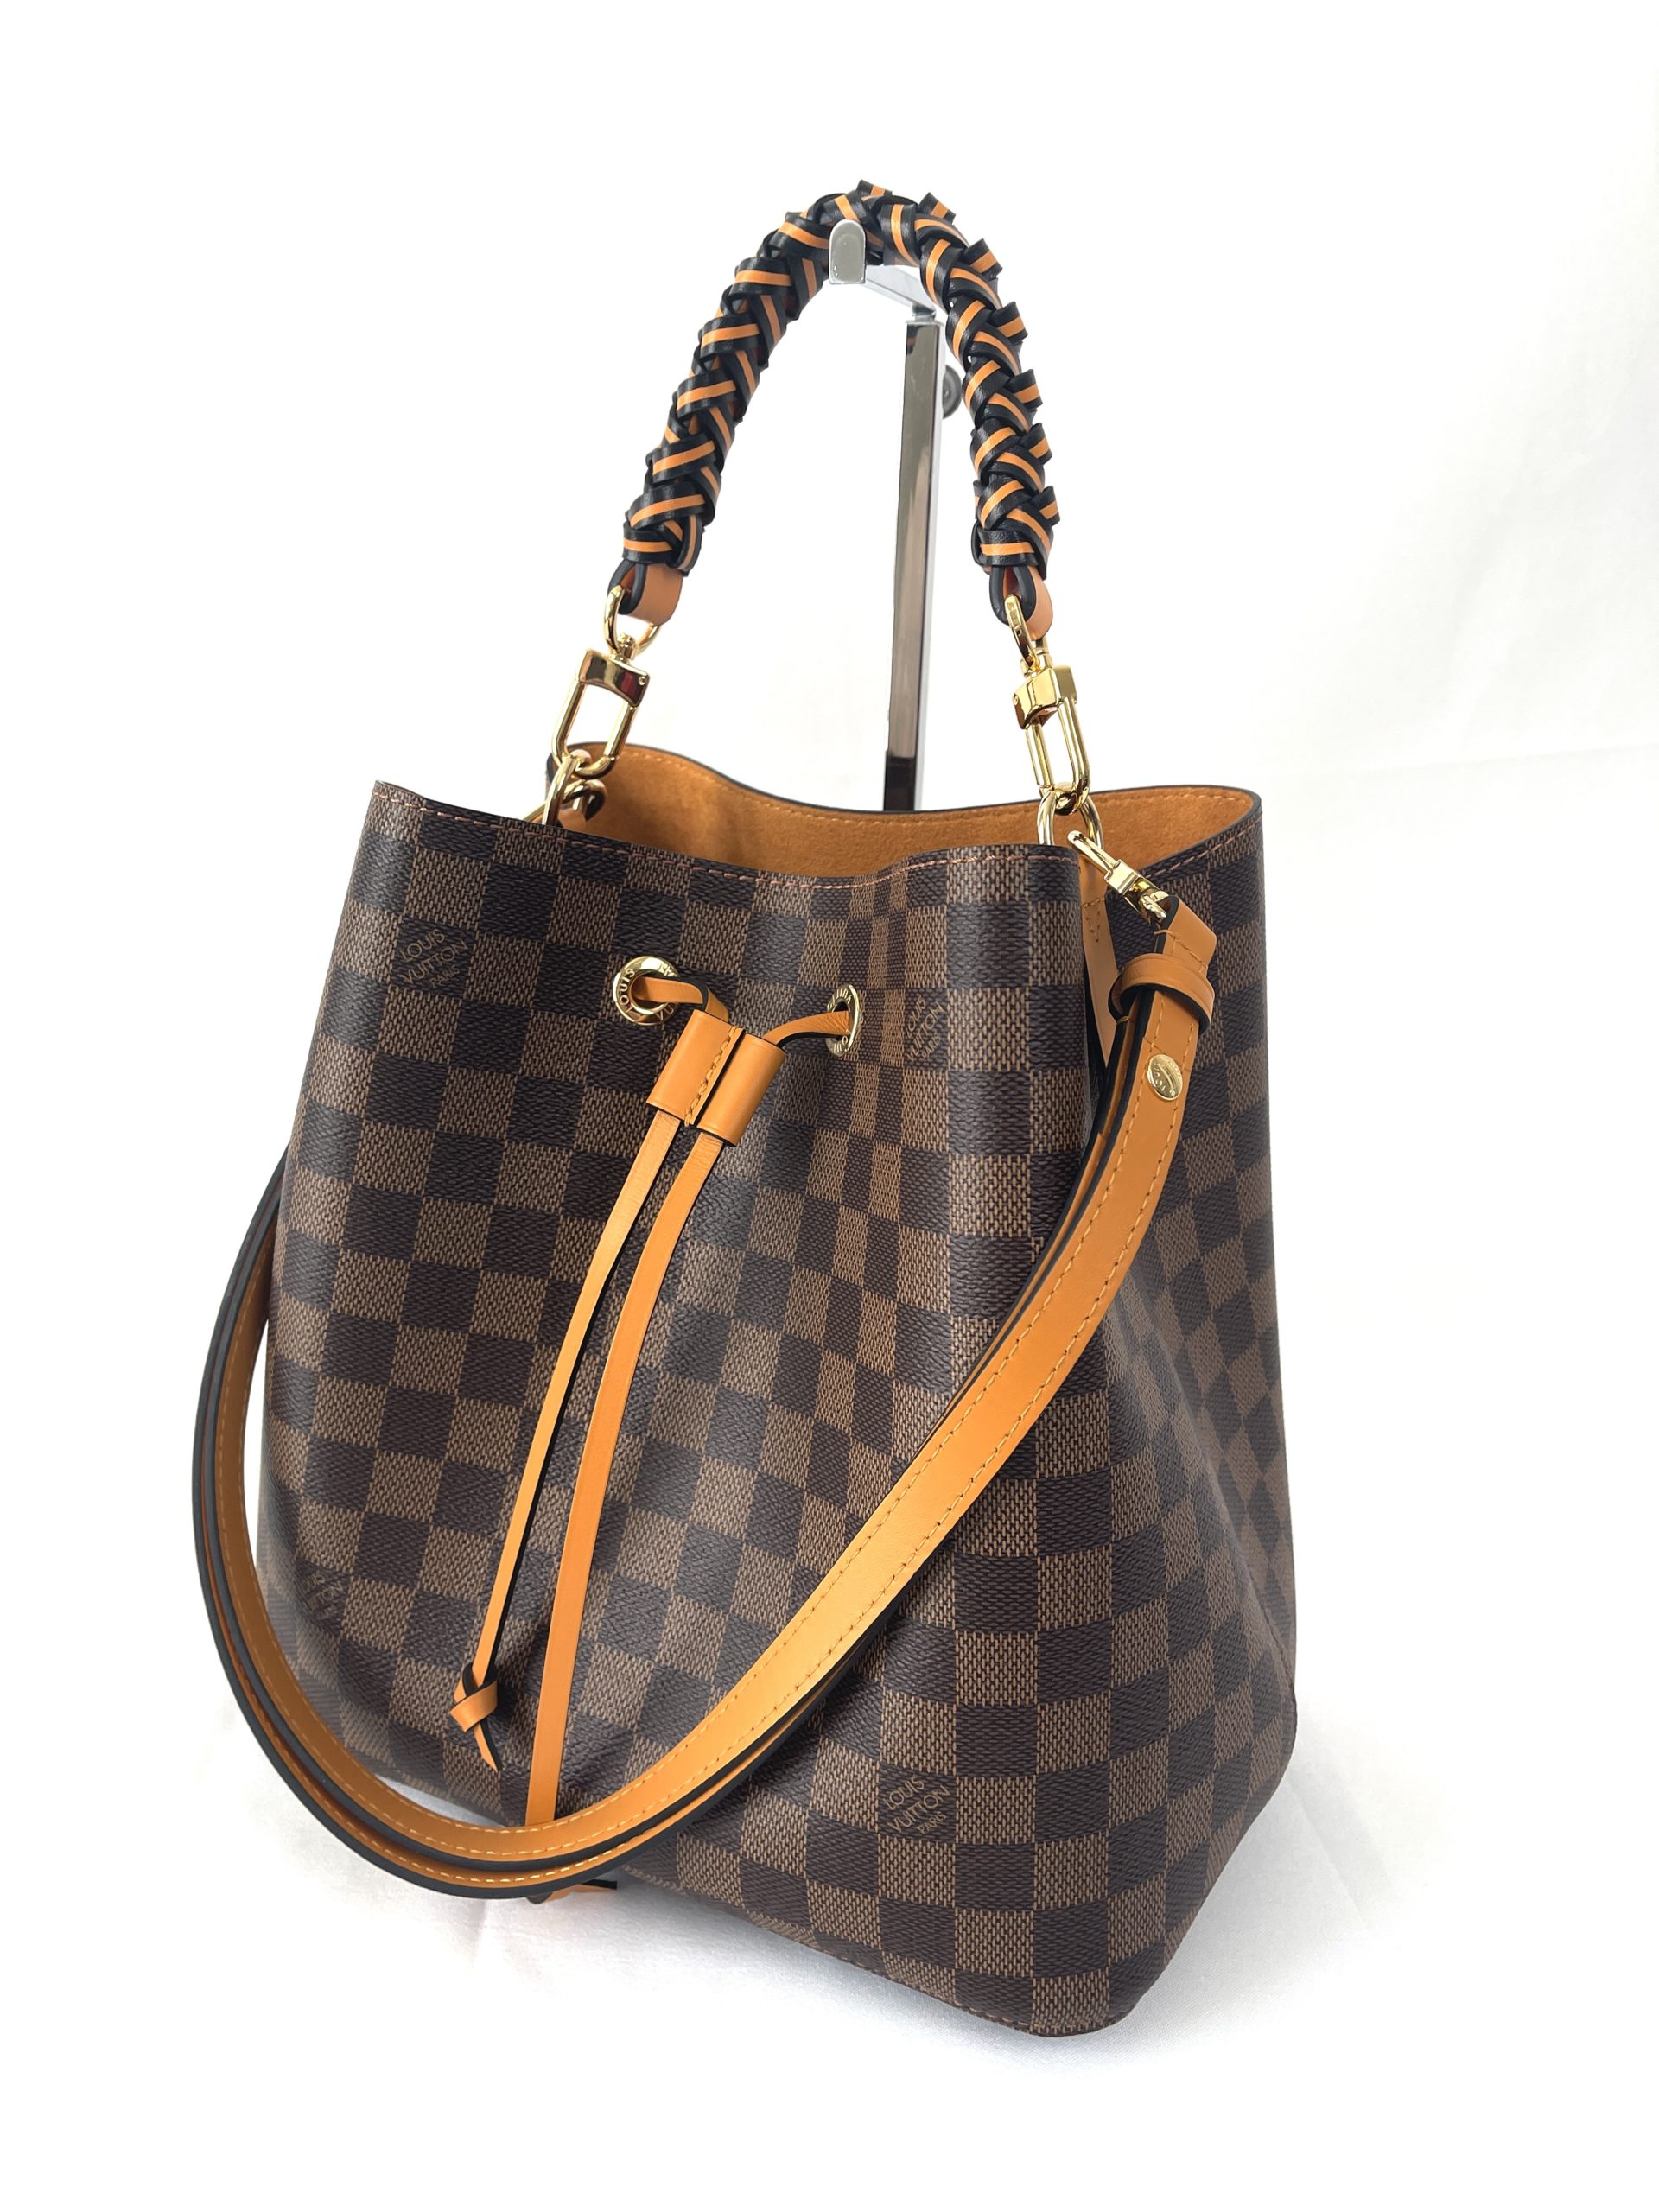 Authentic Louis Vuitton Noe Bucket Bag. Damier Azur Pattern Coated